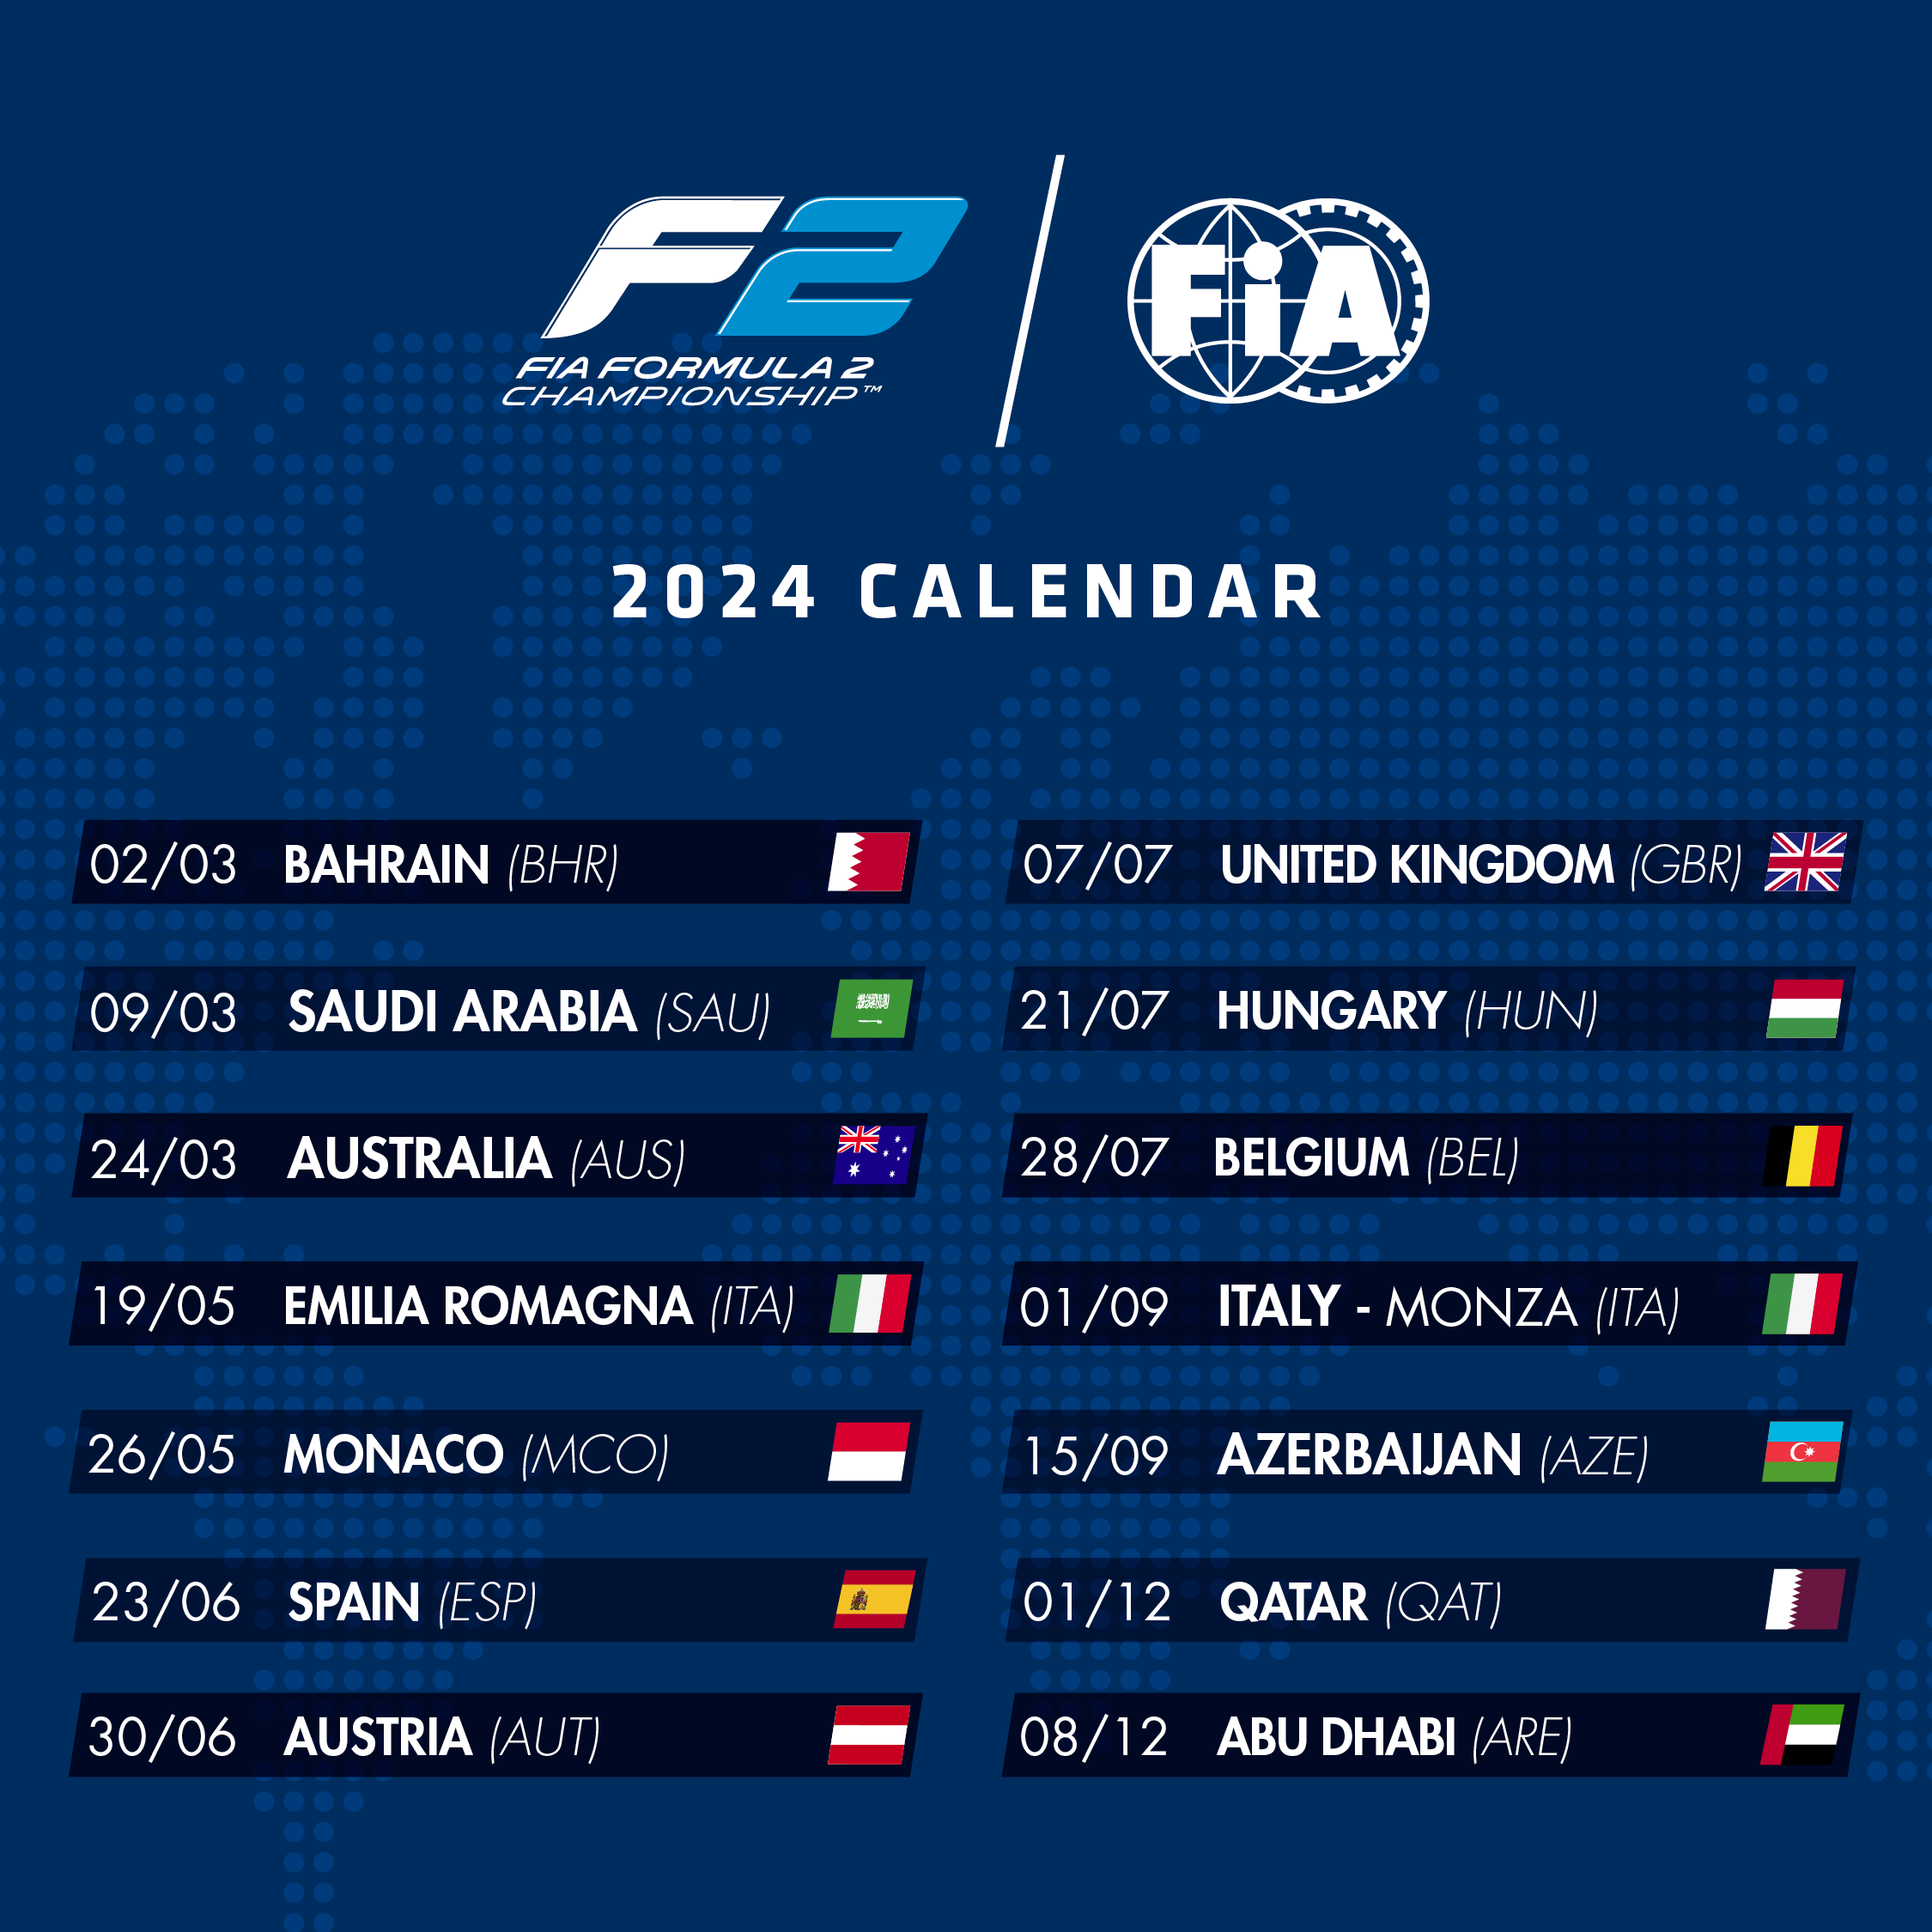 FIA Formula 2 Championship 2024 season calendar announced | Federation ...